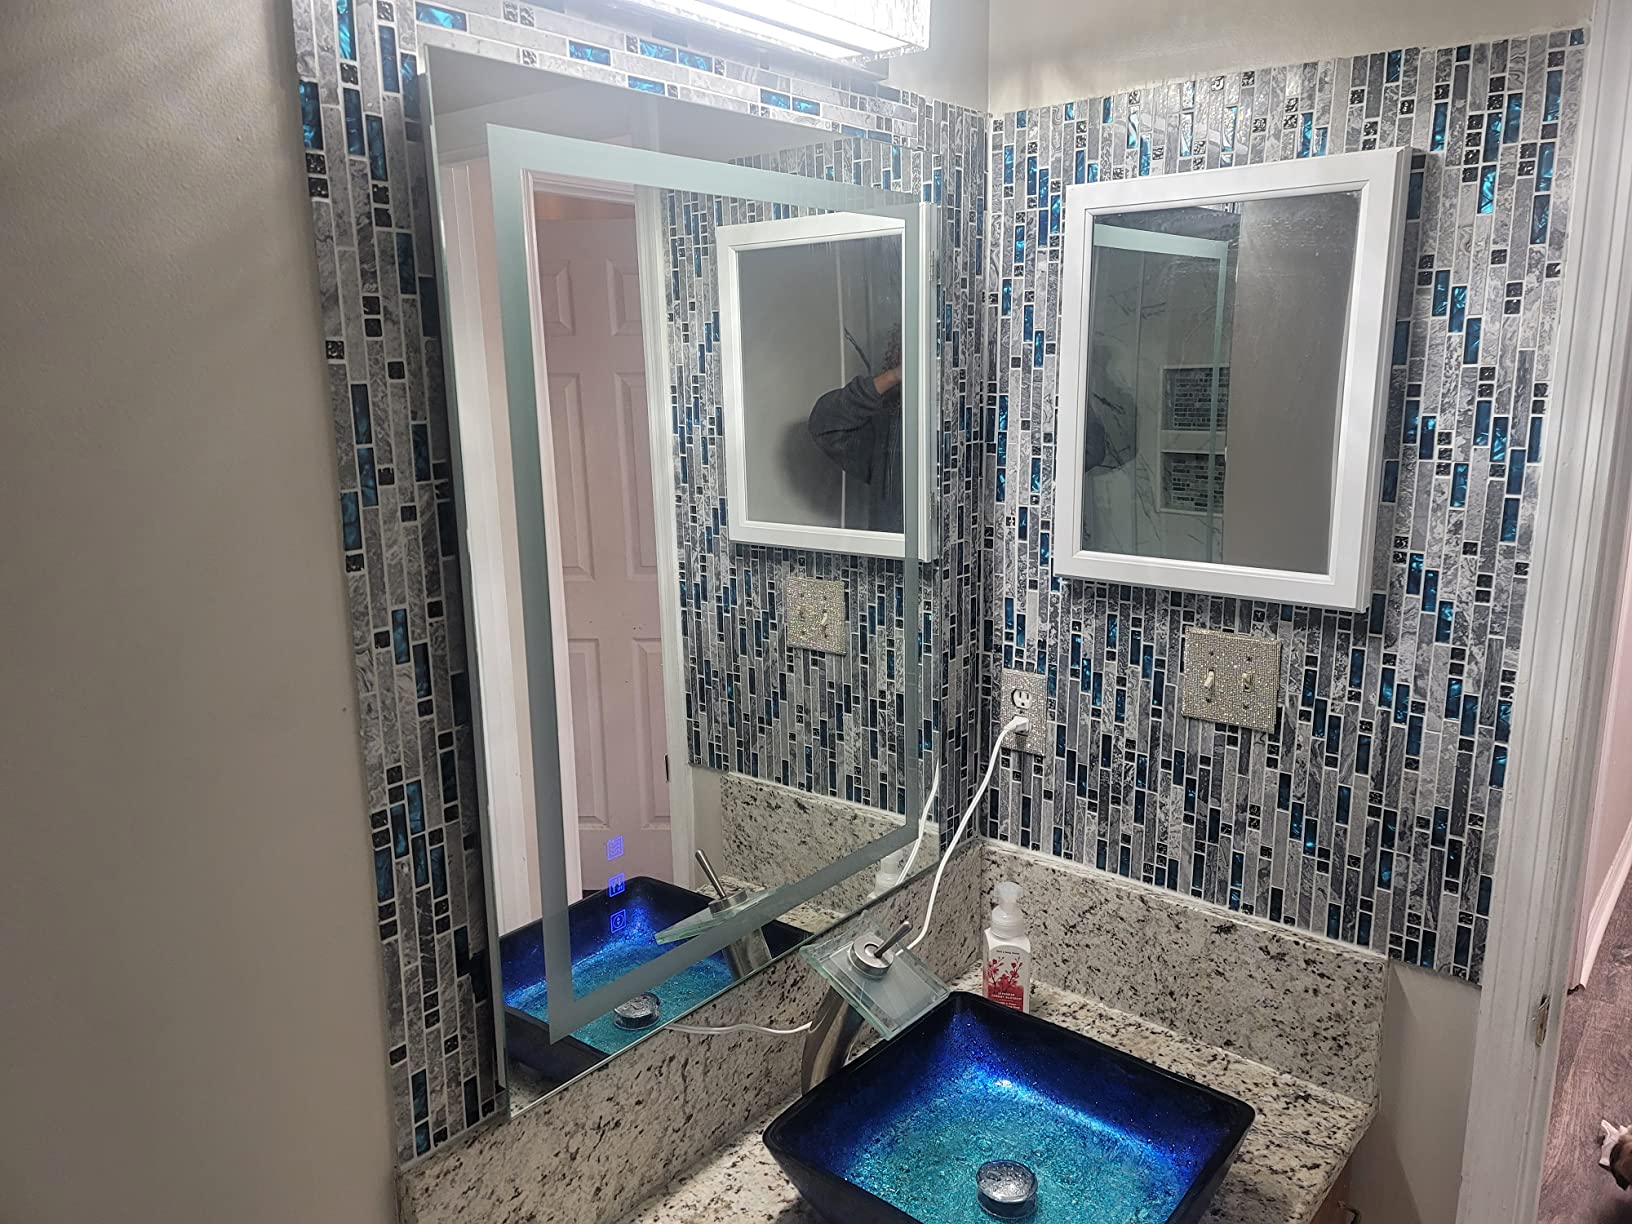 DIY Mosaic Tile Bathroom Mirror